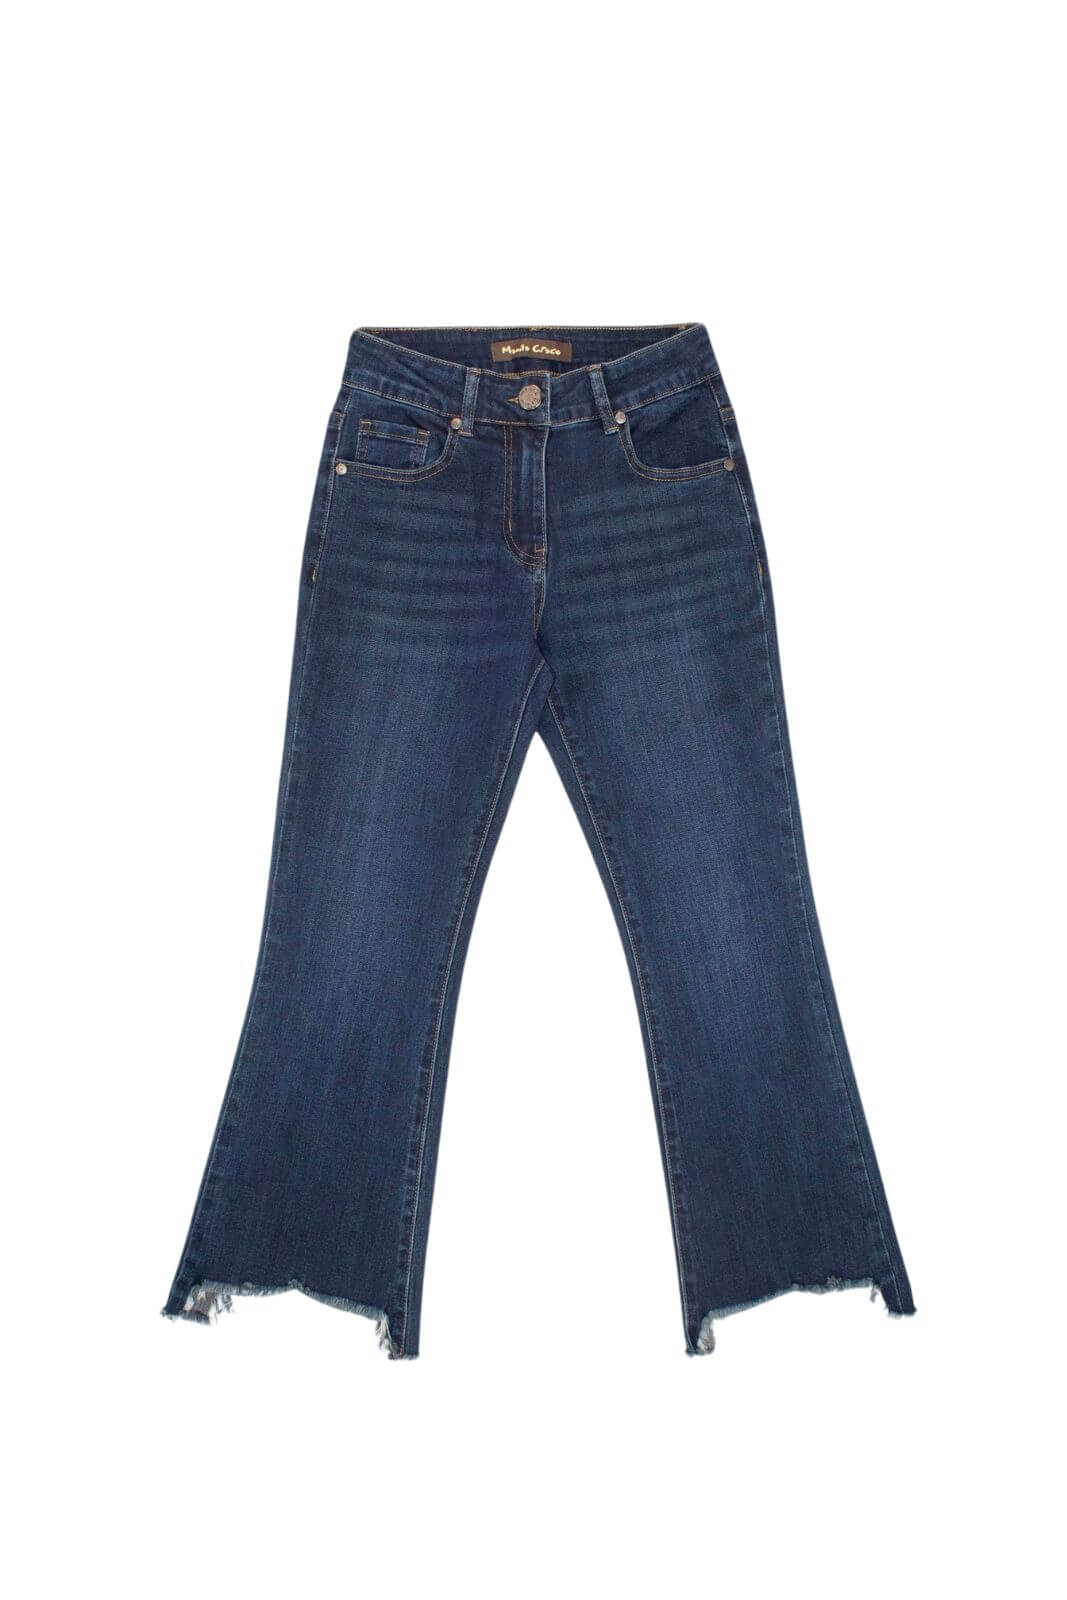 Manila Grace jeans bambina skinny